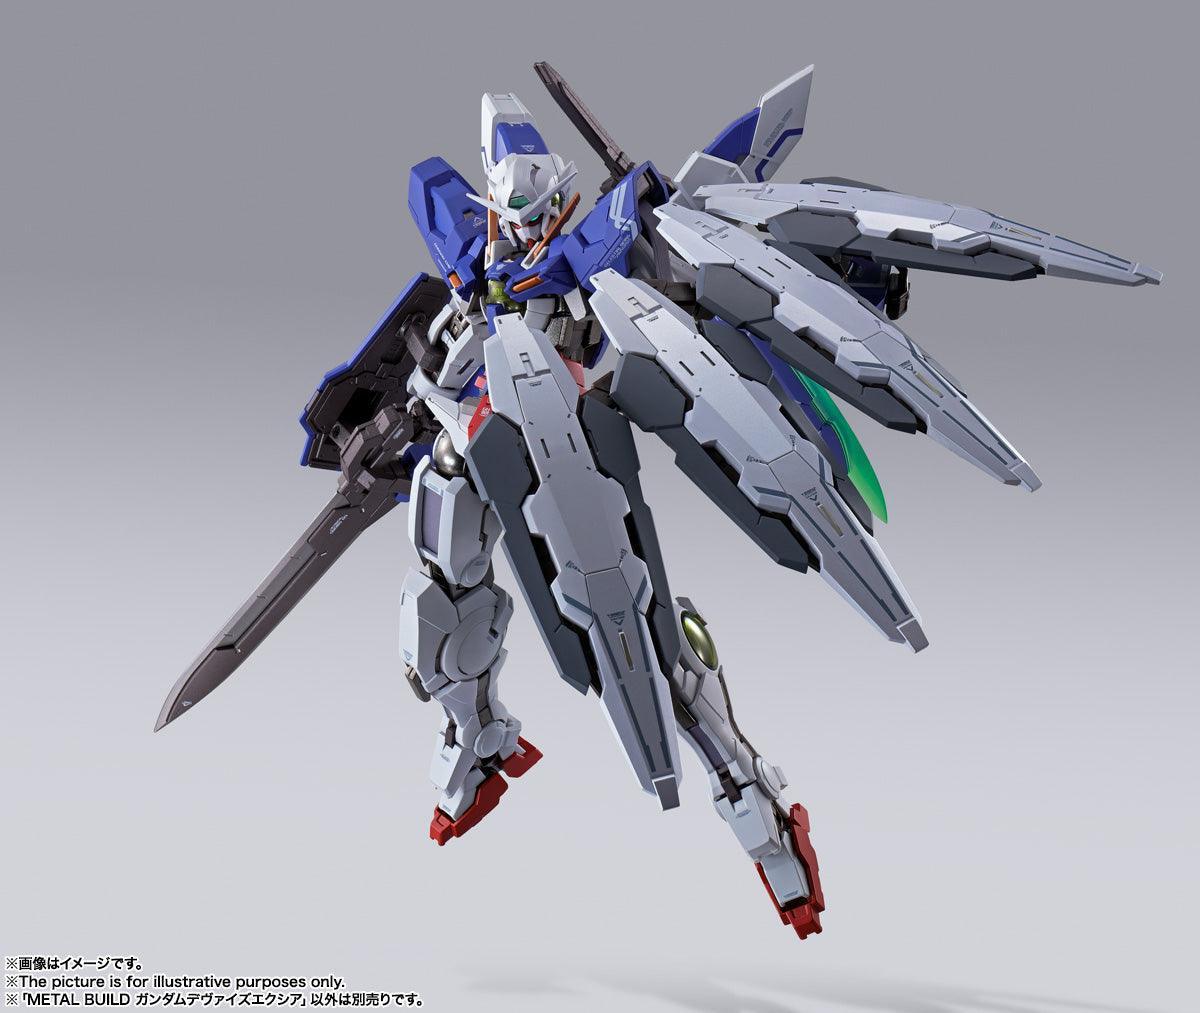 Bandai METAL BUILD Gundam Devise Exia - Kidultverse